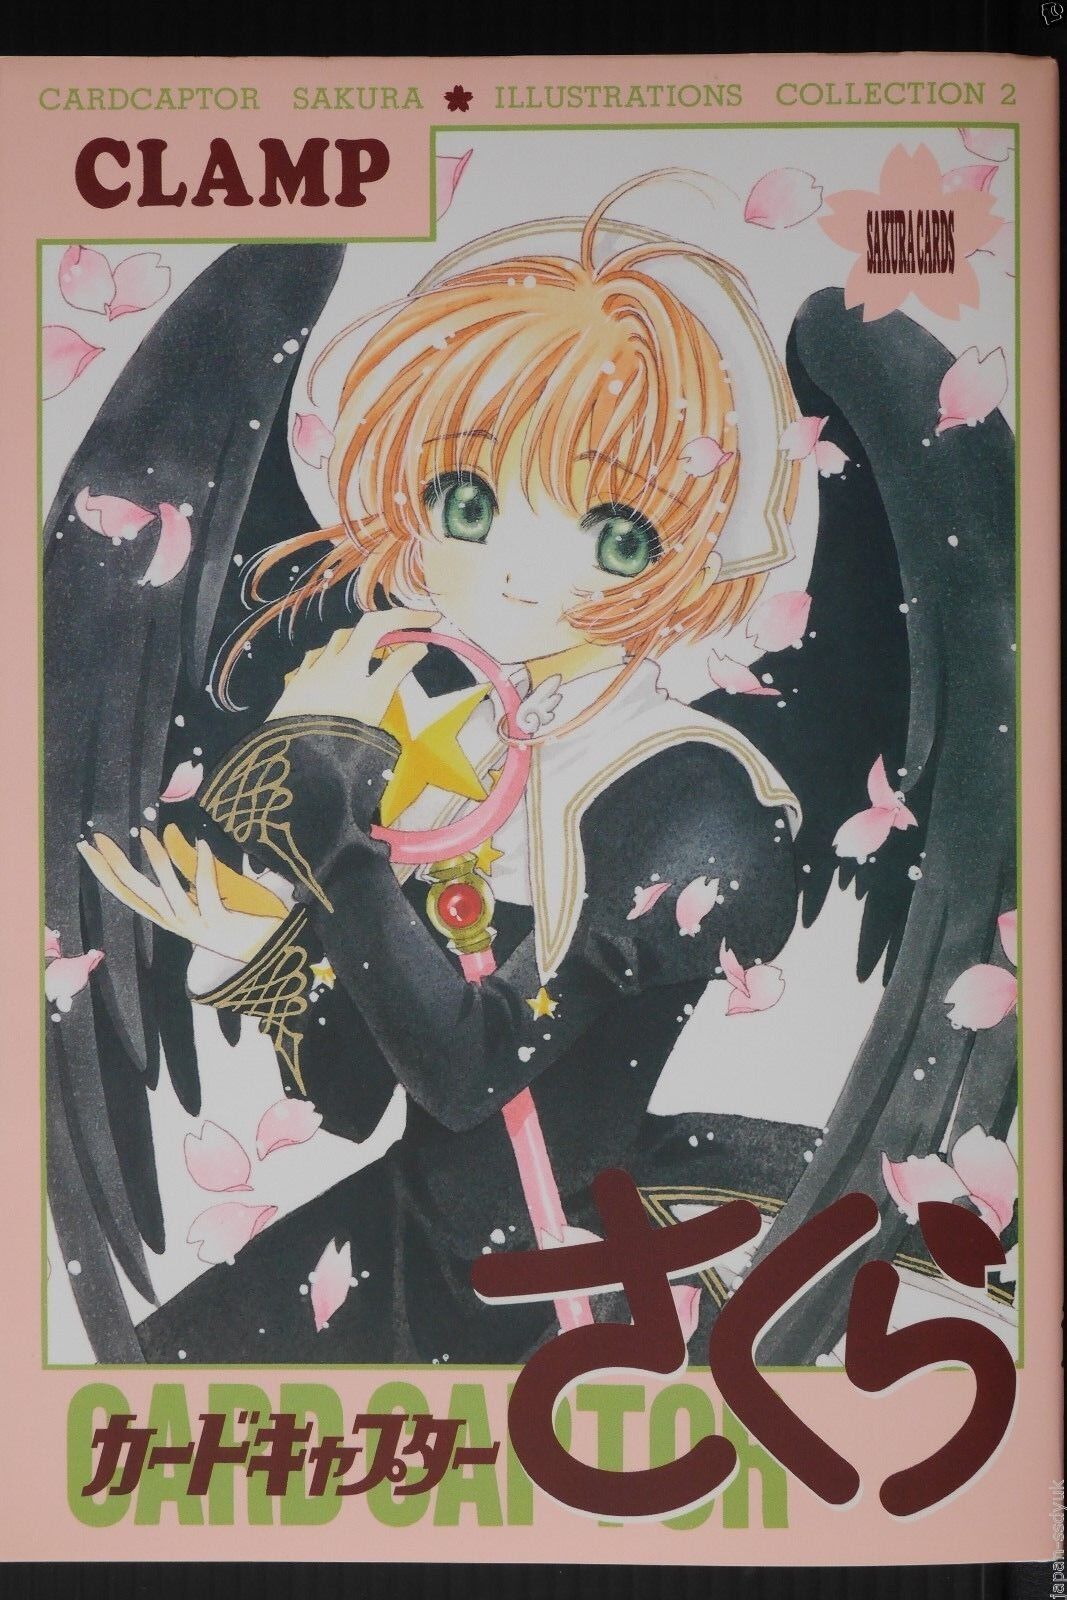 SHOHAN OOP: Cardcaptor Sakura Illustrations Collection 2 (art book) by CLAMP